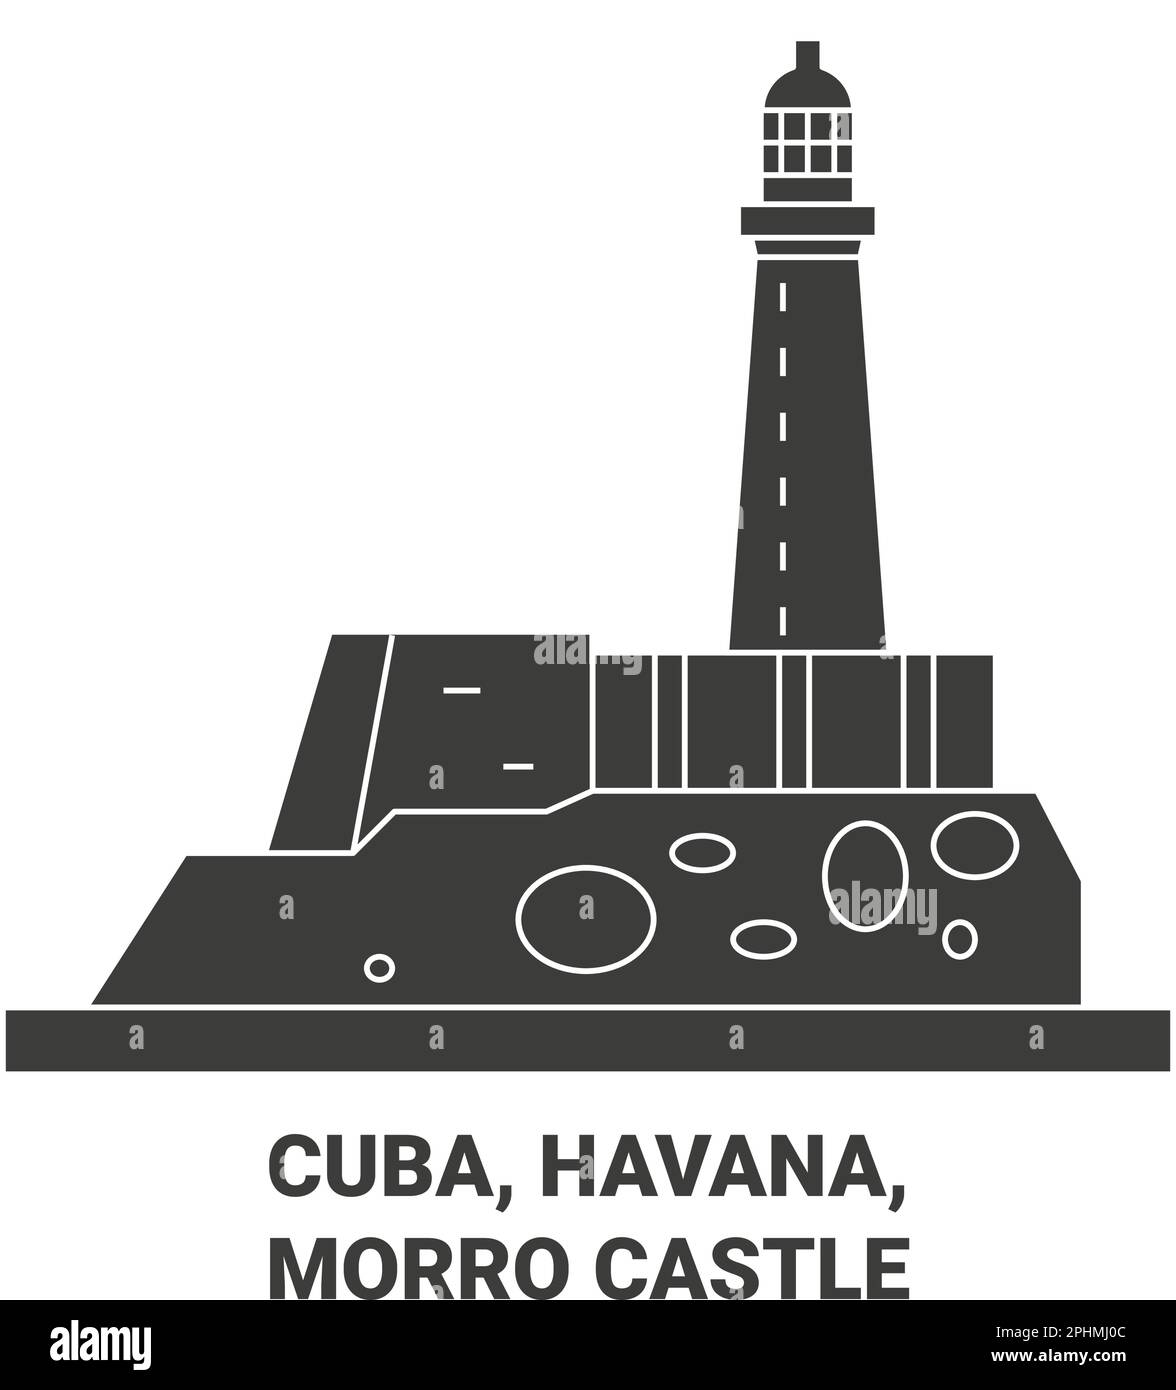 Cuba, Havana, Morro Castle travel landmark vector illustration Stock Vector